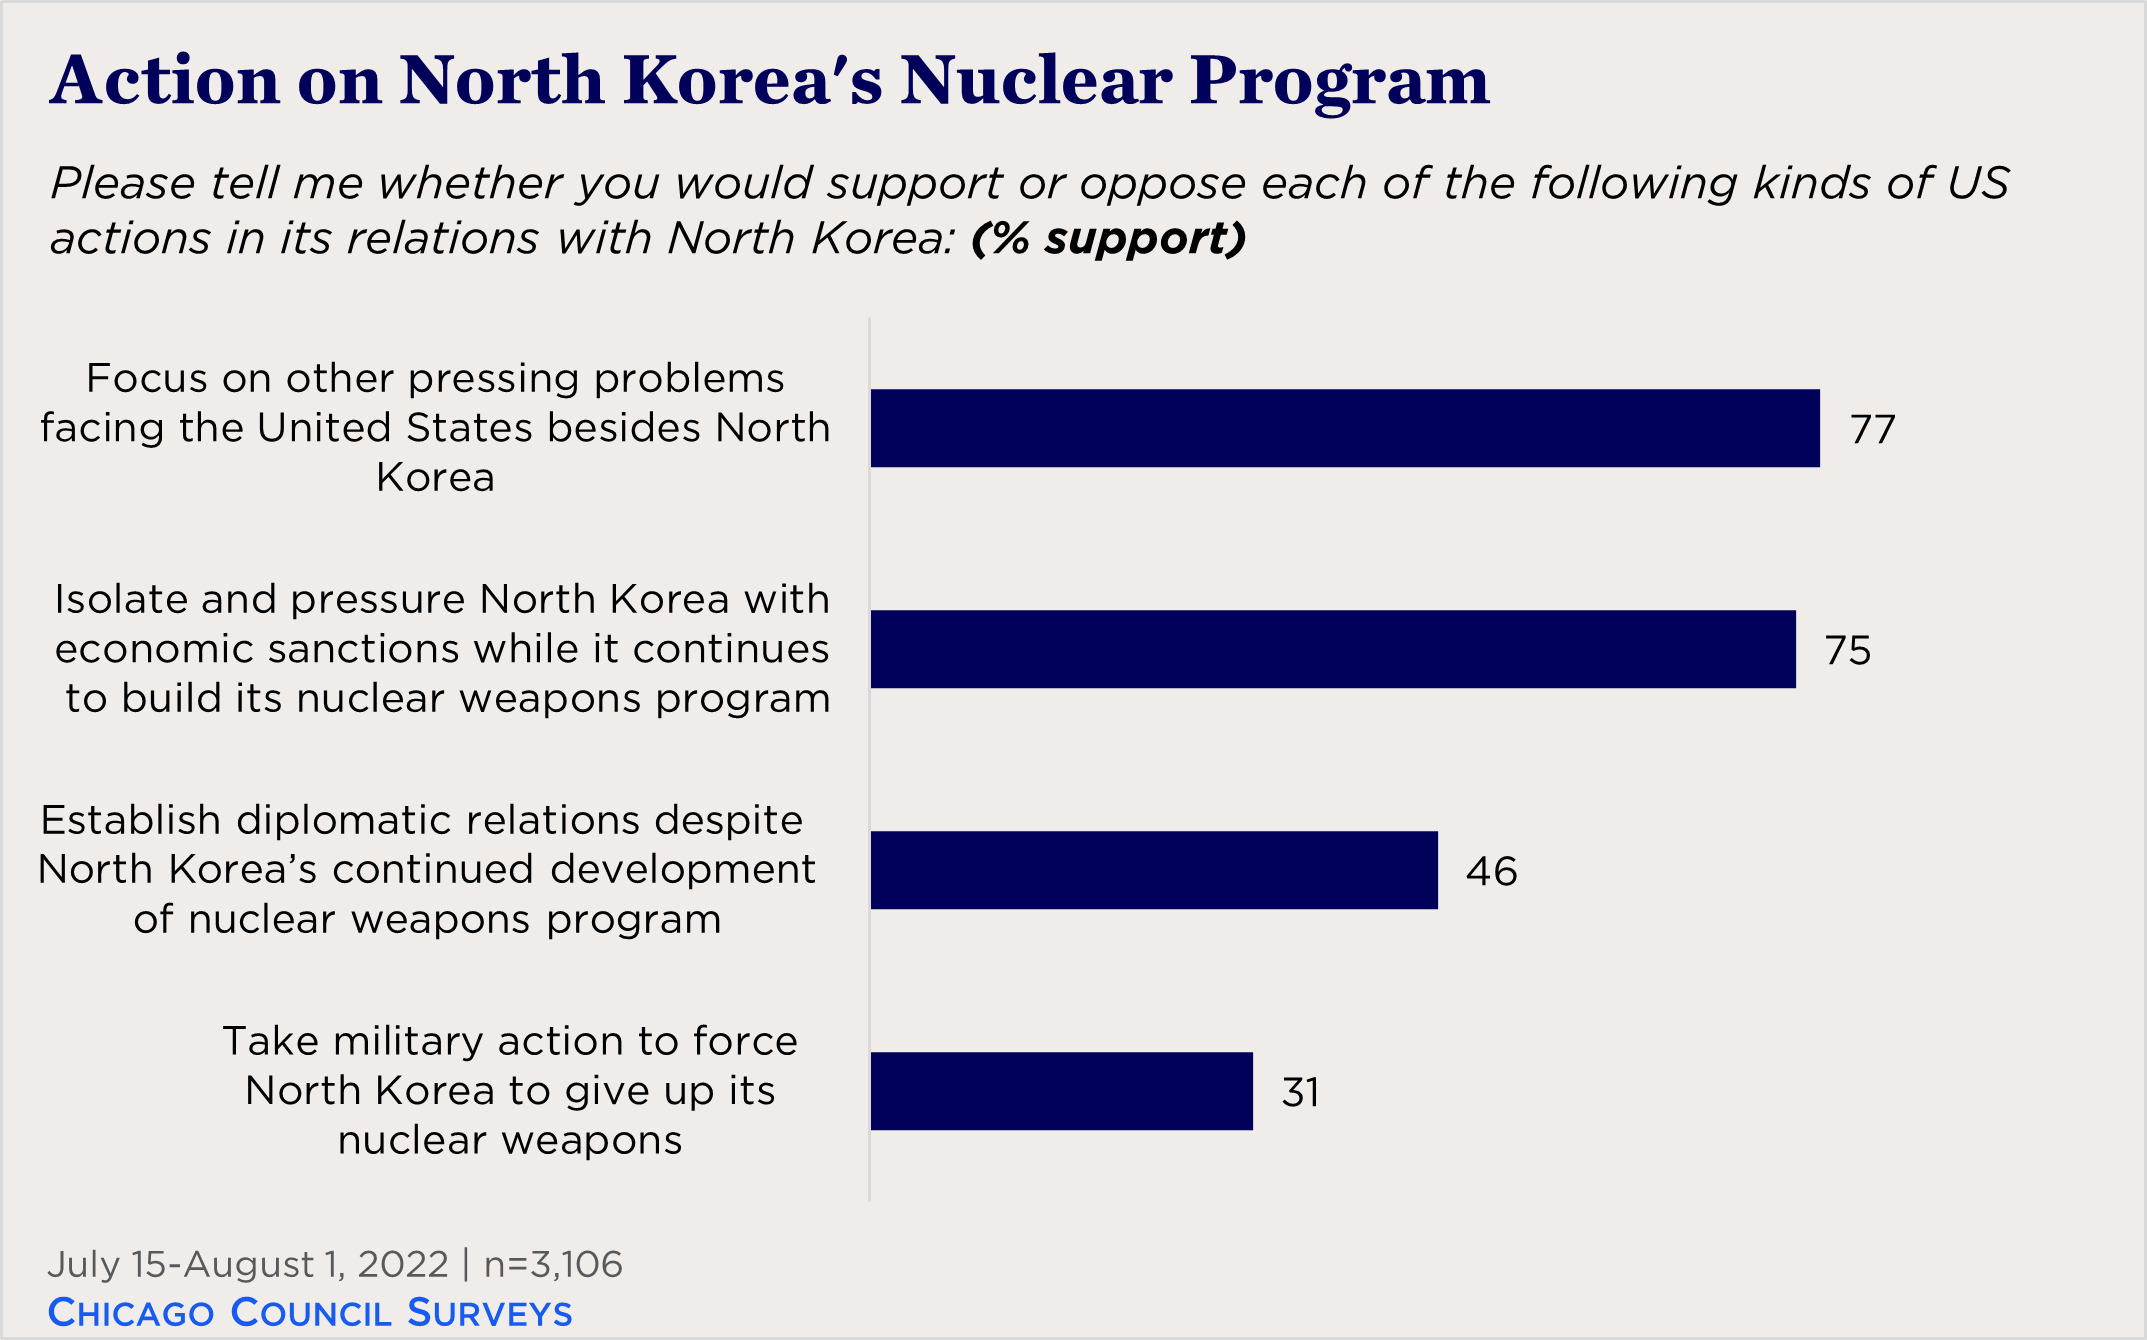 "bar chart showing views on action toward North Korea's nuclear program"